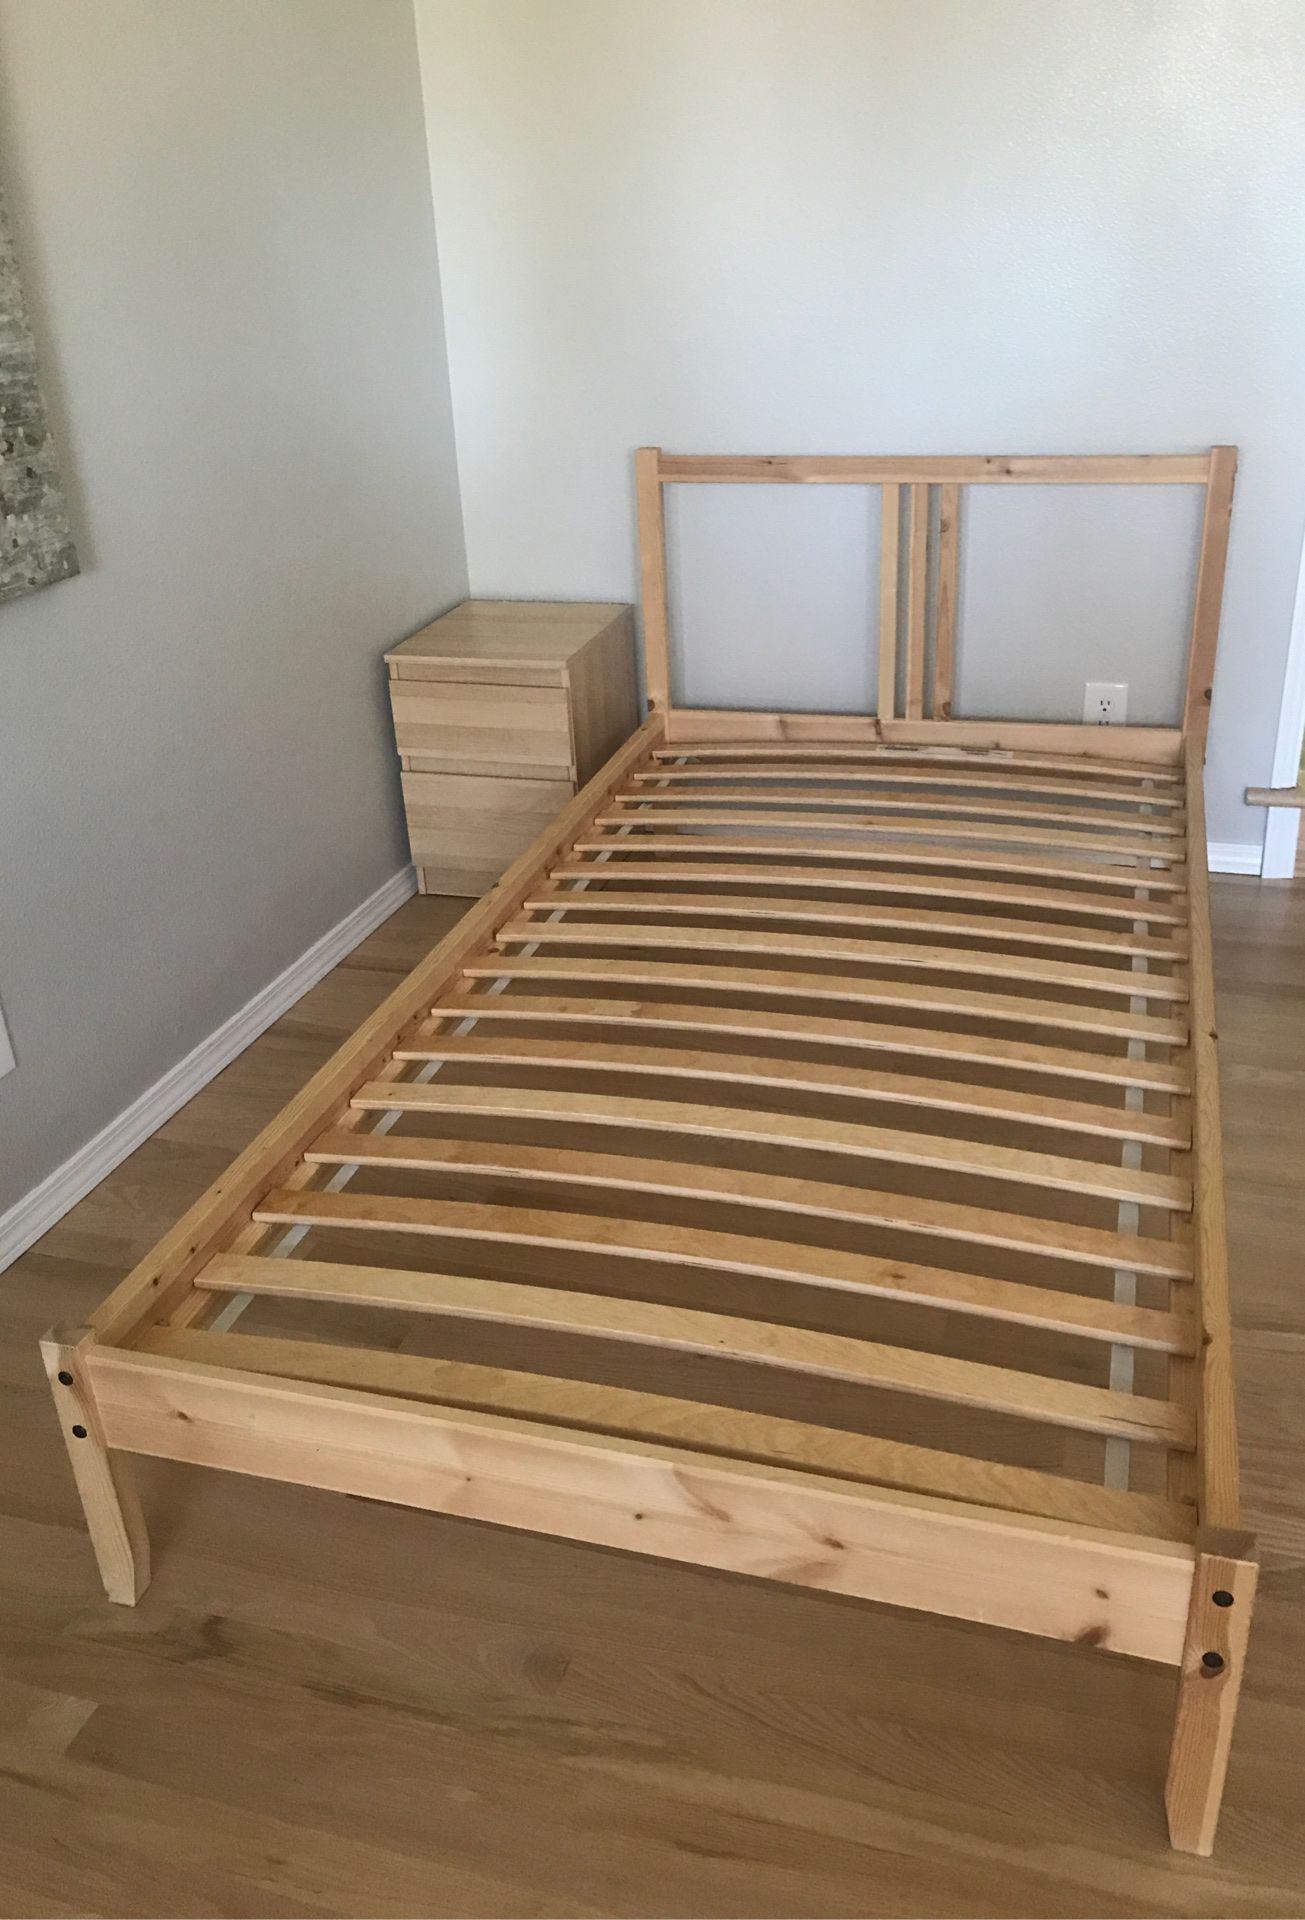 IKEA twin bed plus night stand